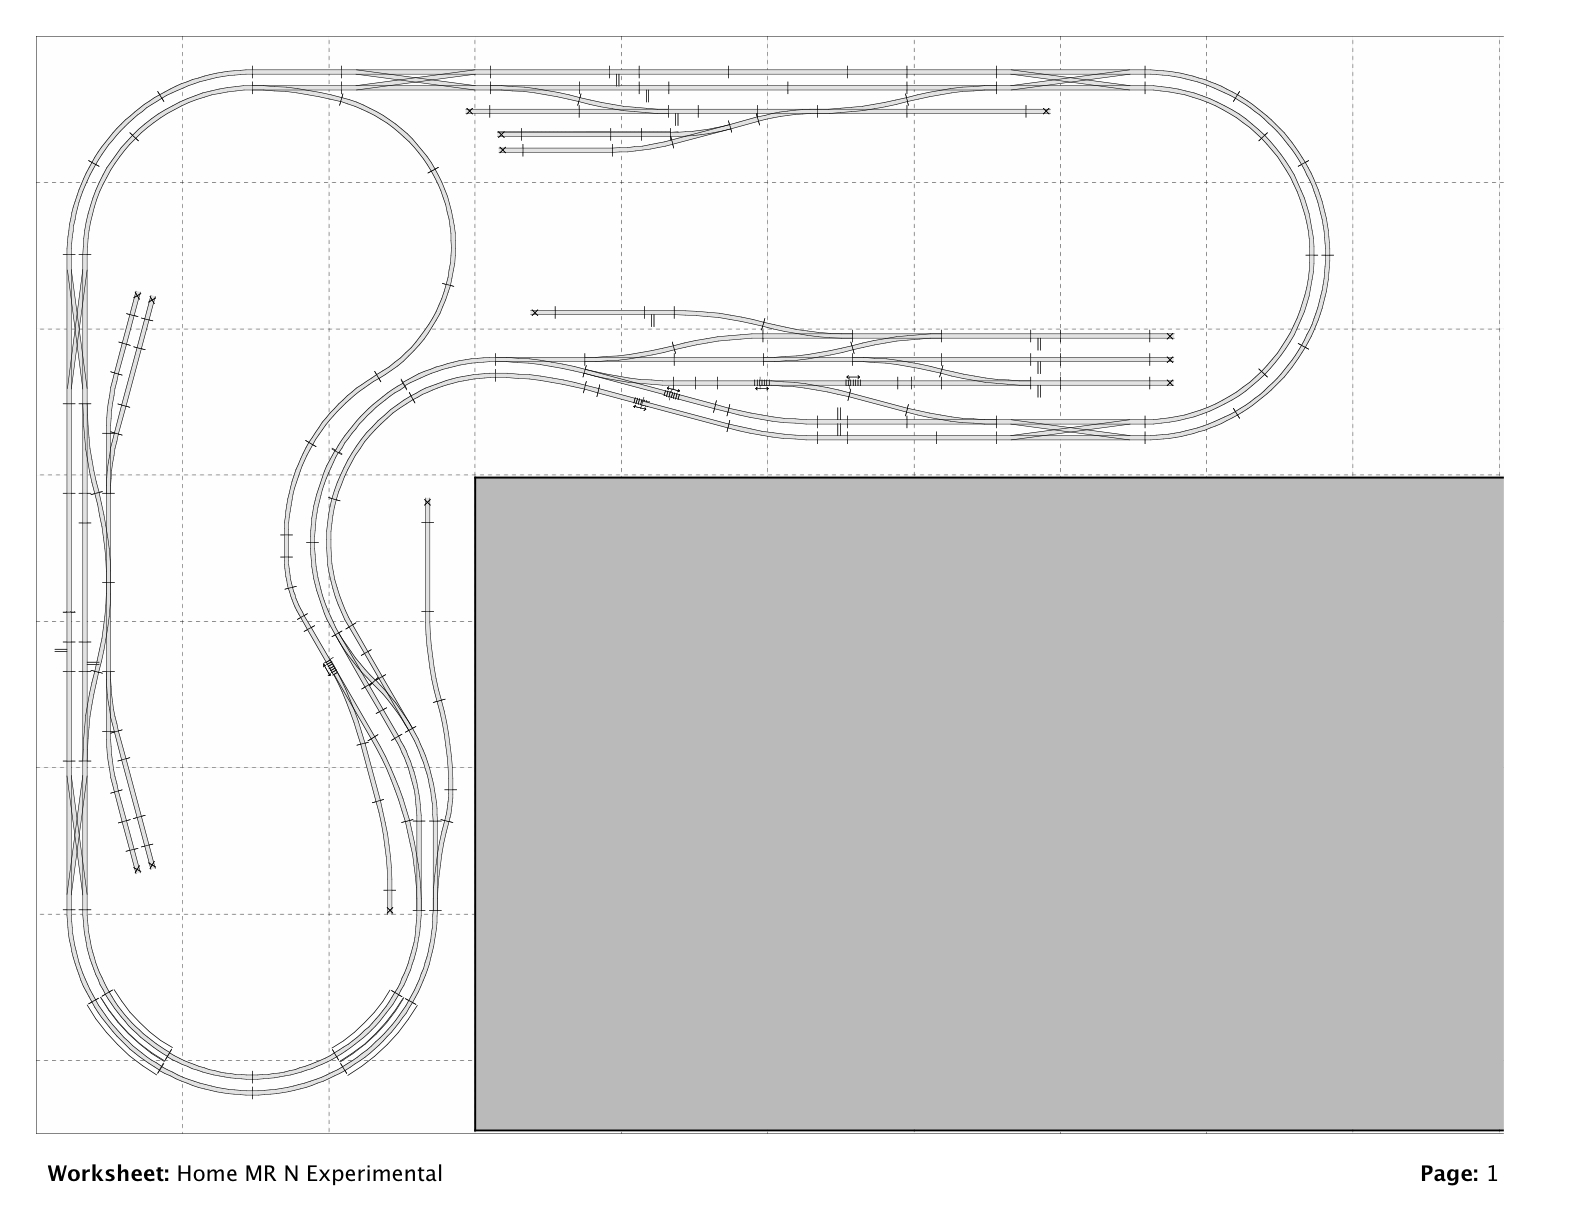 Train Toy Ho Model Train Layouts Plans Design Layout Plans PDF Download